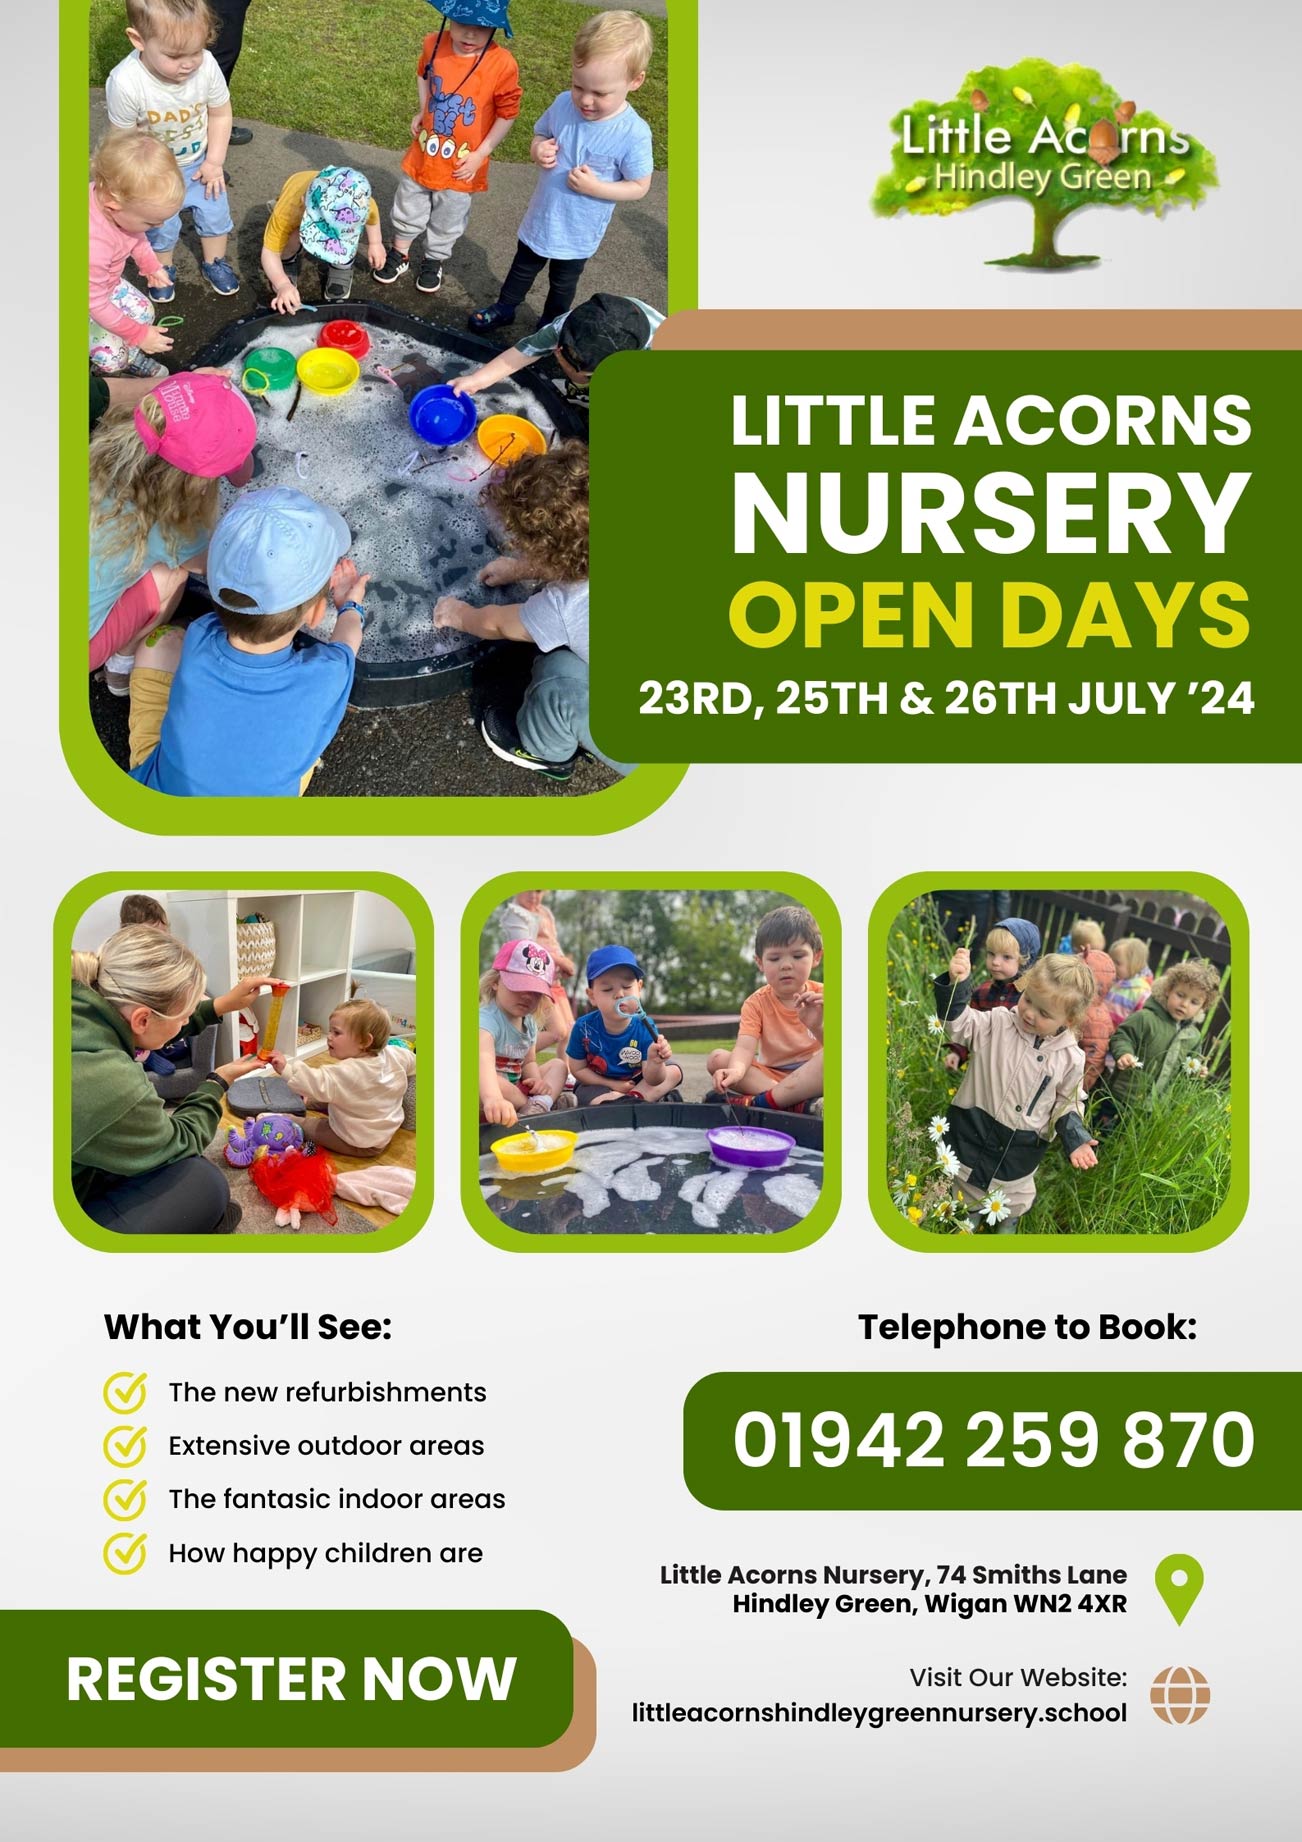 Poster for Little Acorns Nursery open days in July 2024.